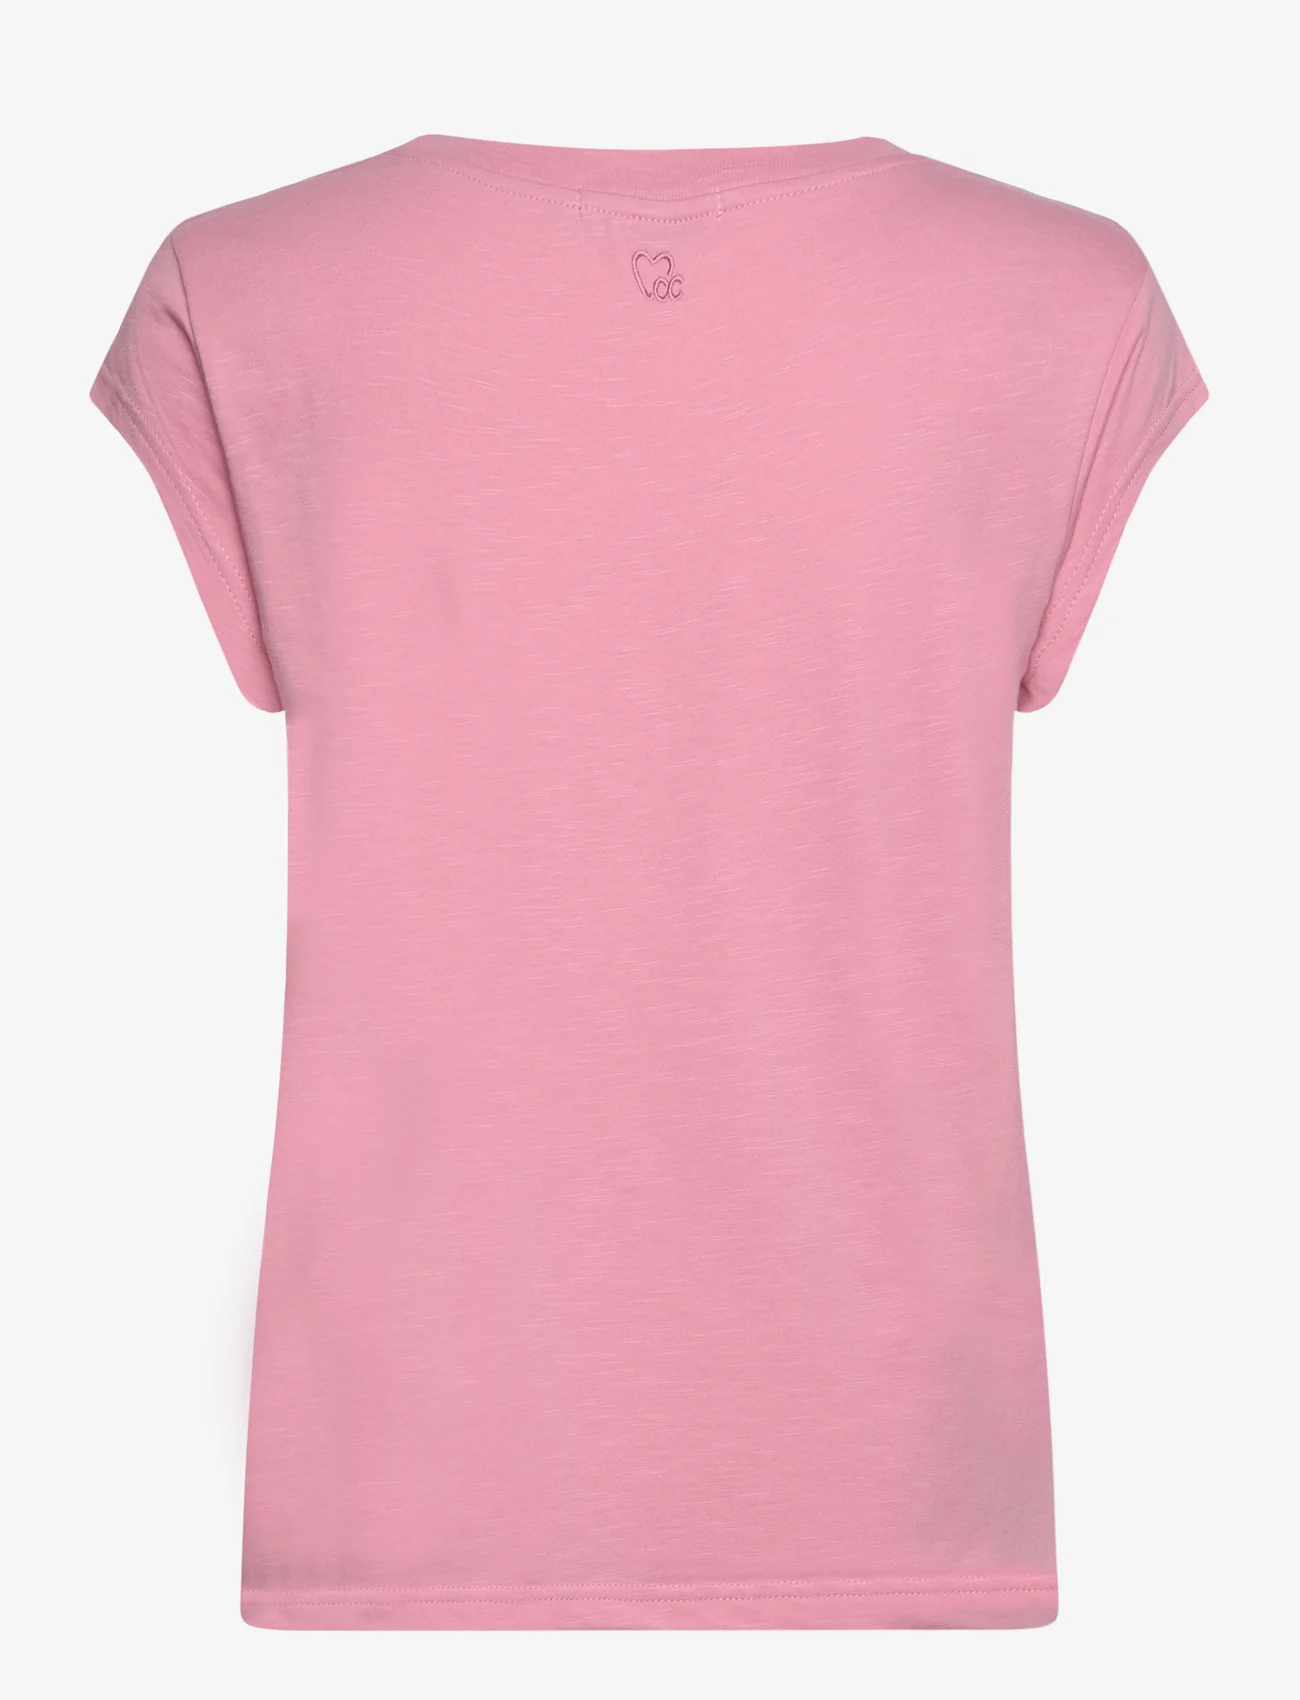 Coster Copenhagen - CC Heart basic t-shirt - lowest prices - dust pink - 1